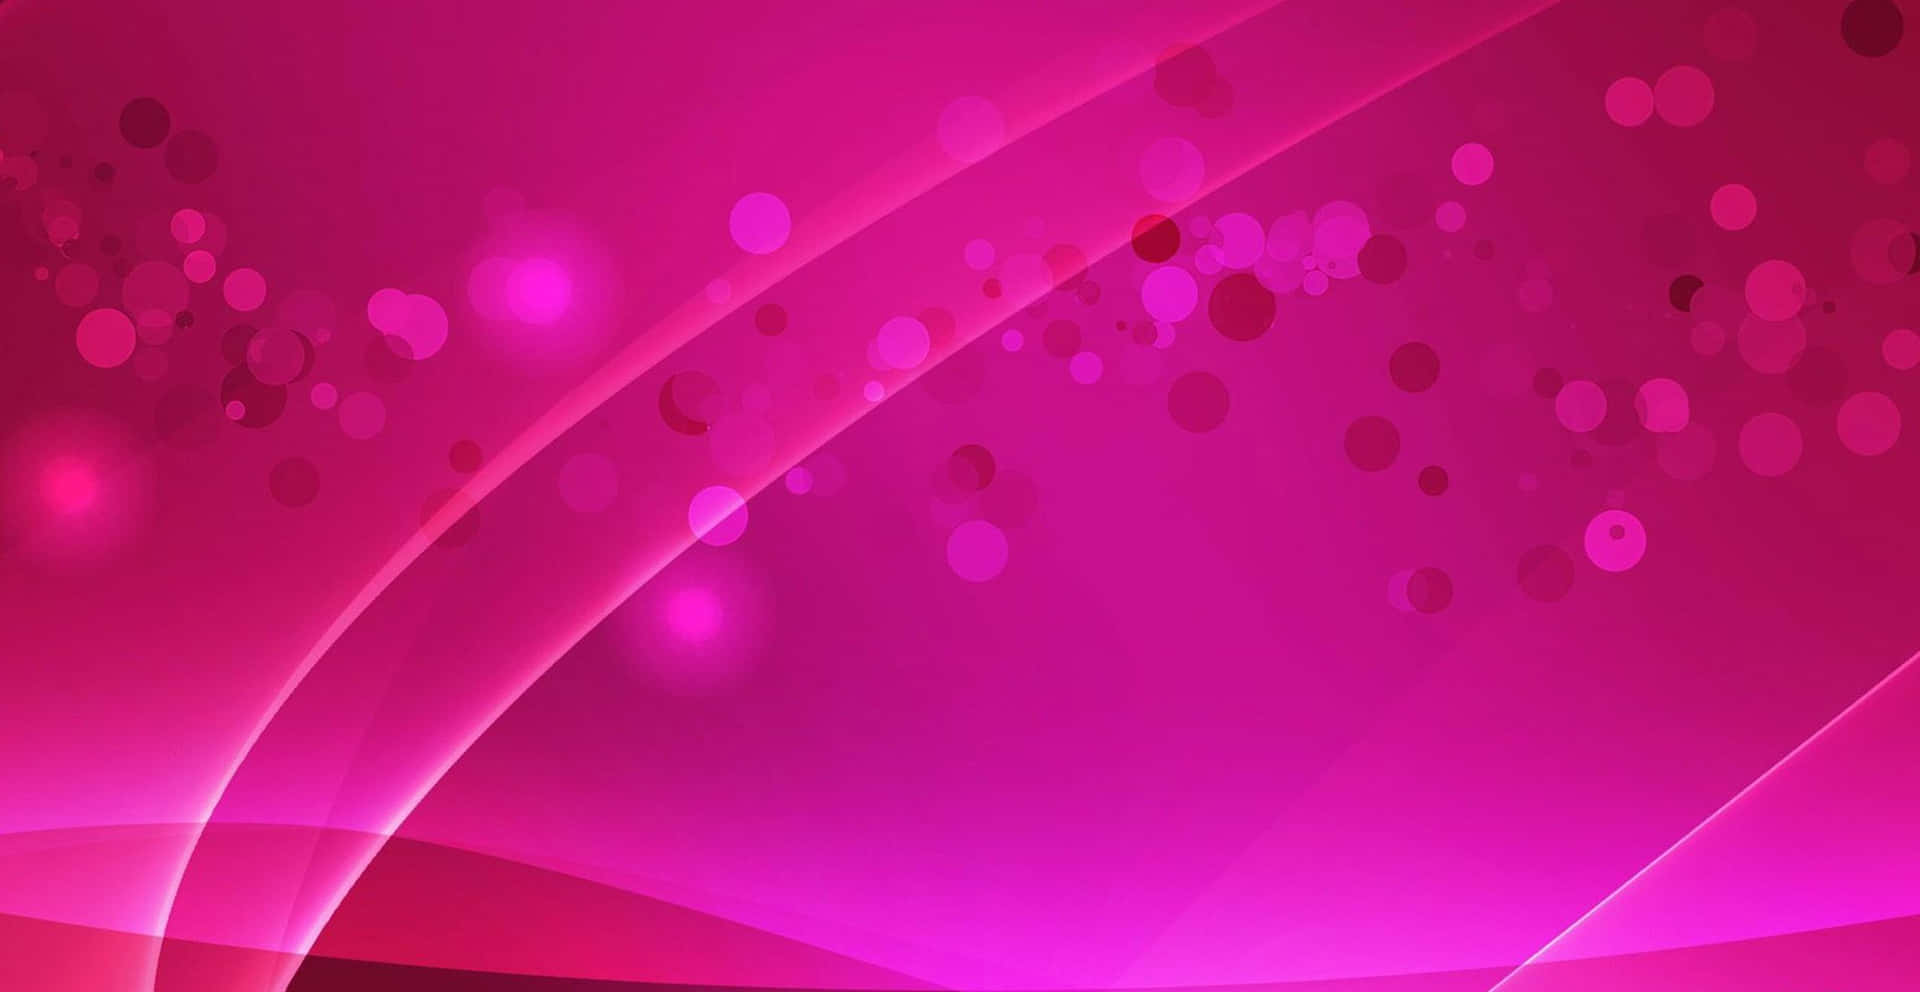 Stylish pink abstract design